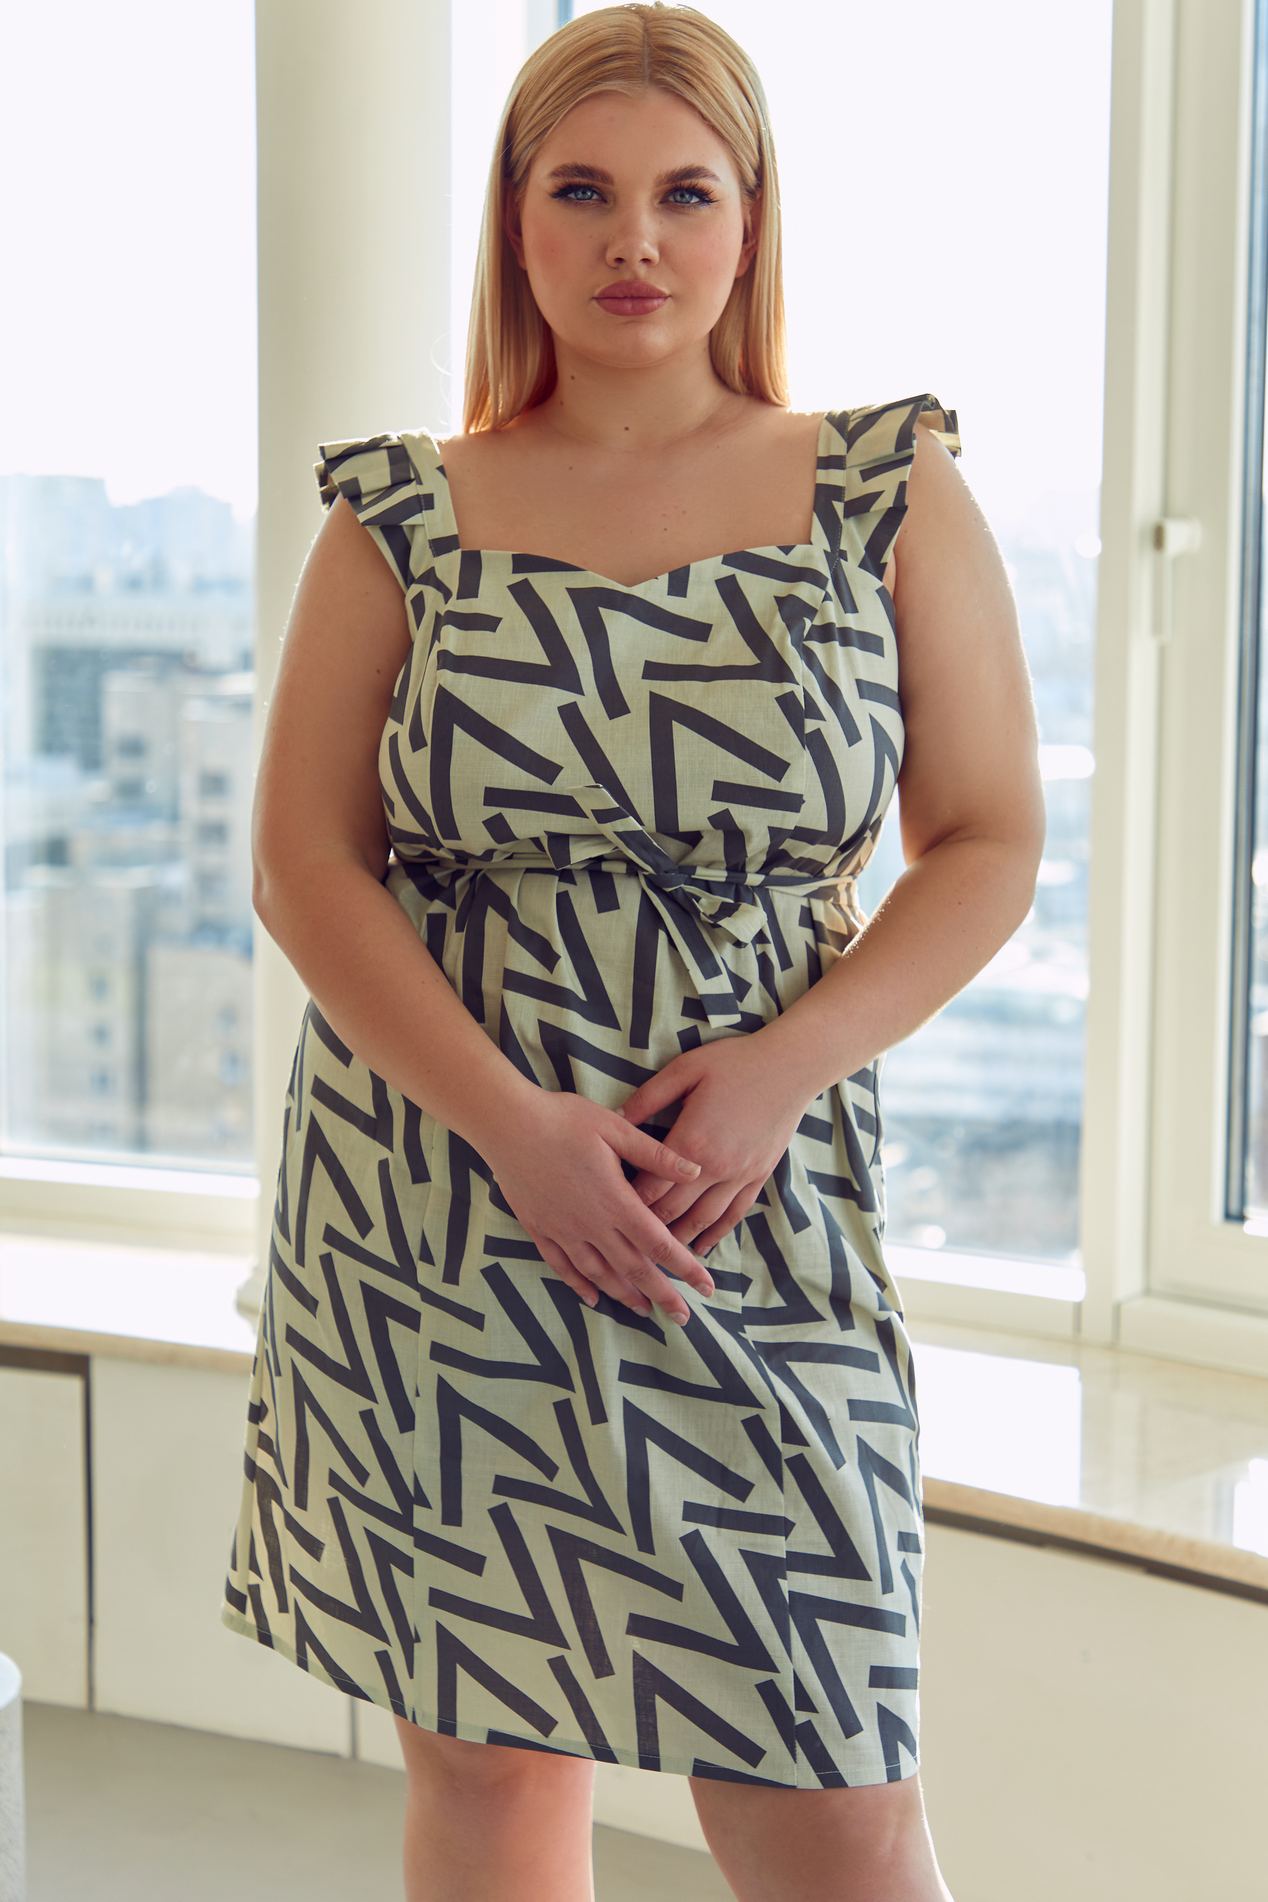 A woman wearing a pattern design dress